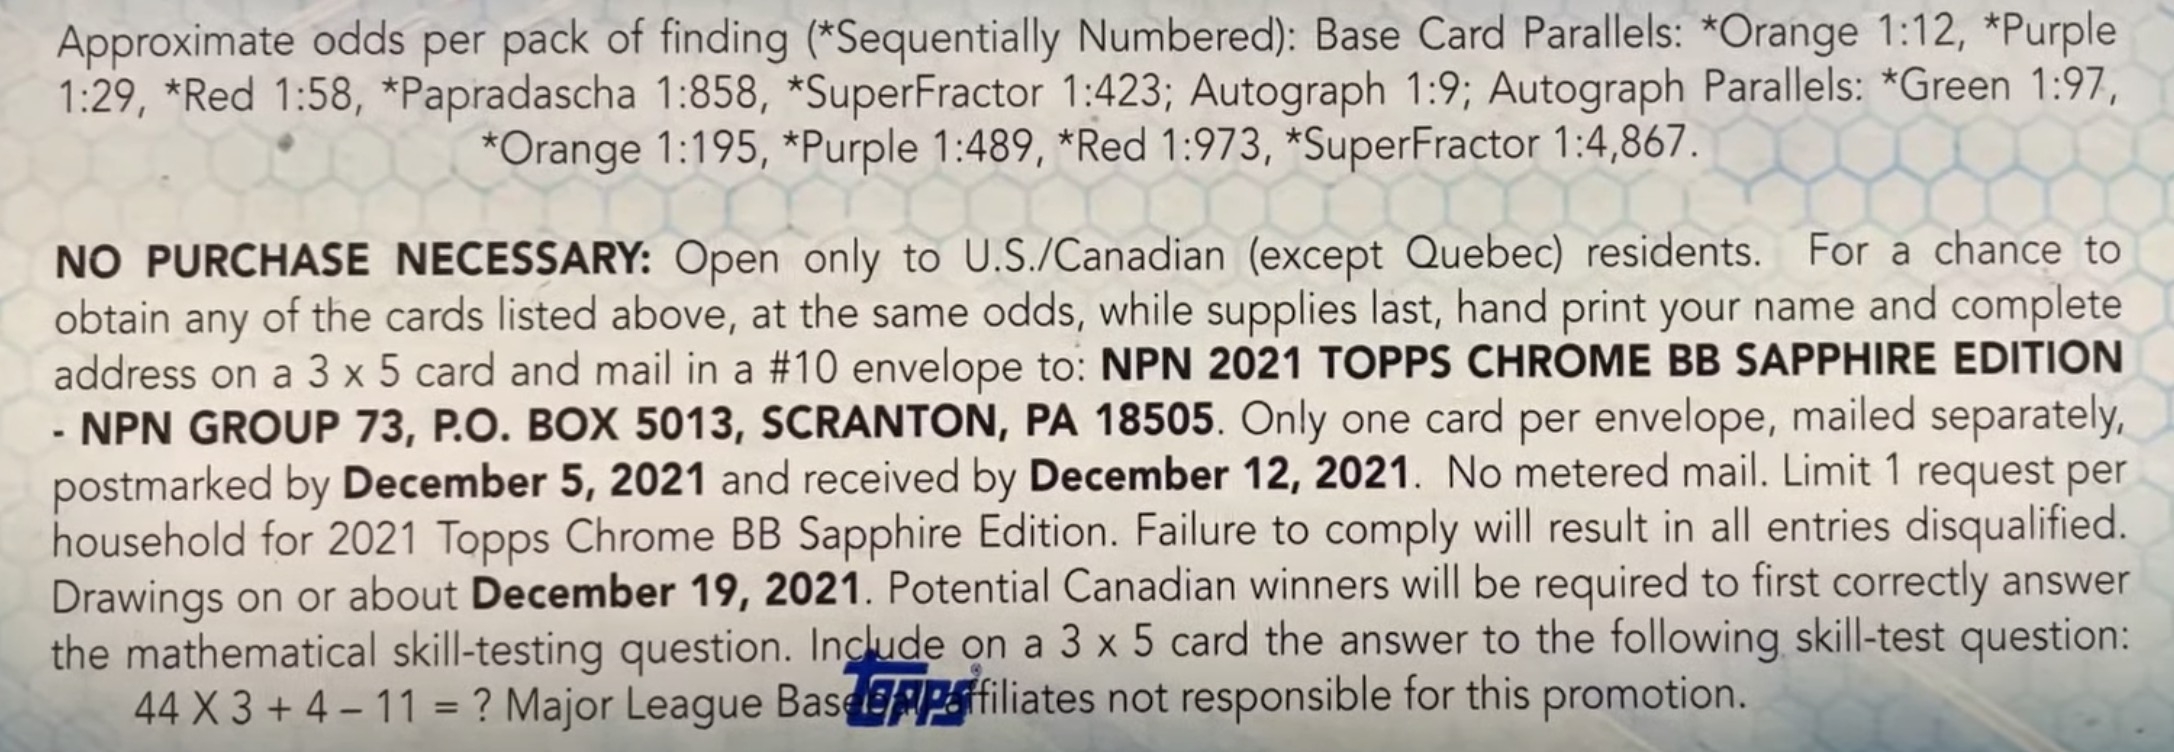 2021 Topps Chrome Sapphire Edition Baseball Cards - Hobby Box - No Purchase Necessary (NPN) Information